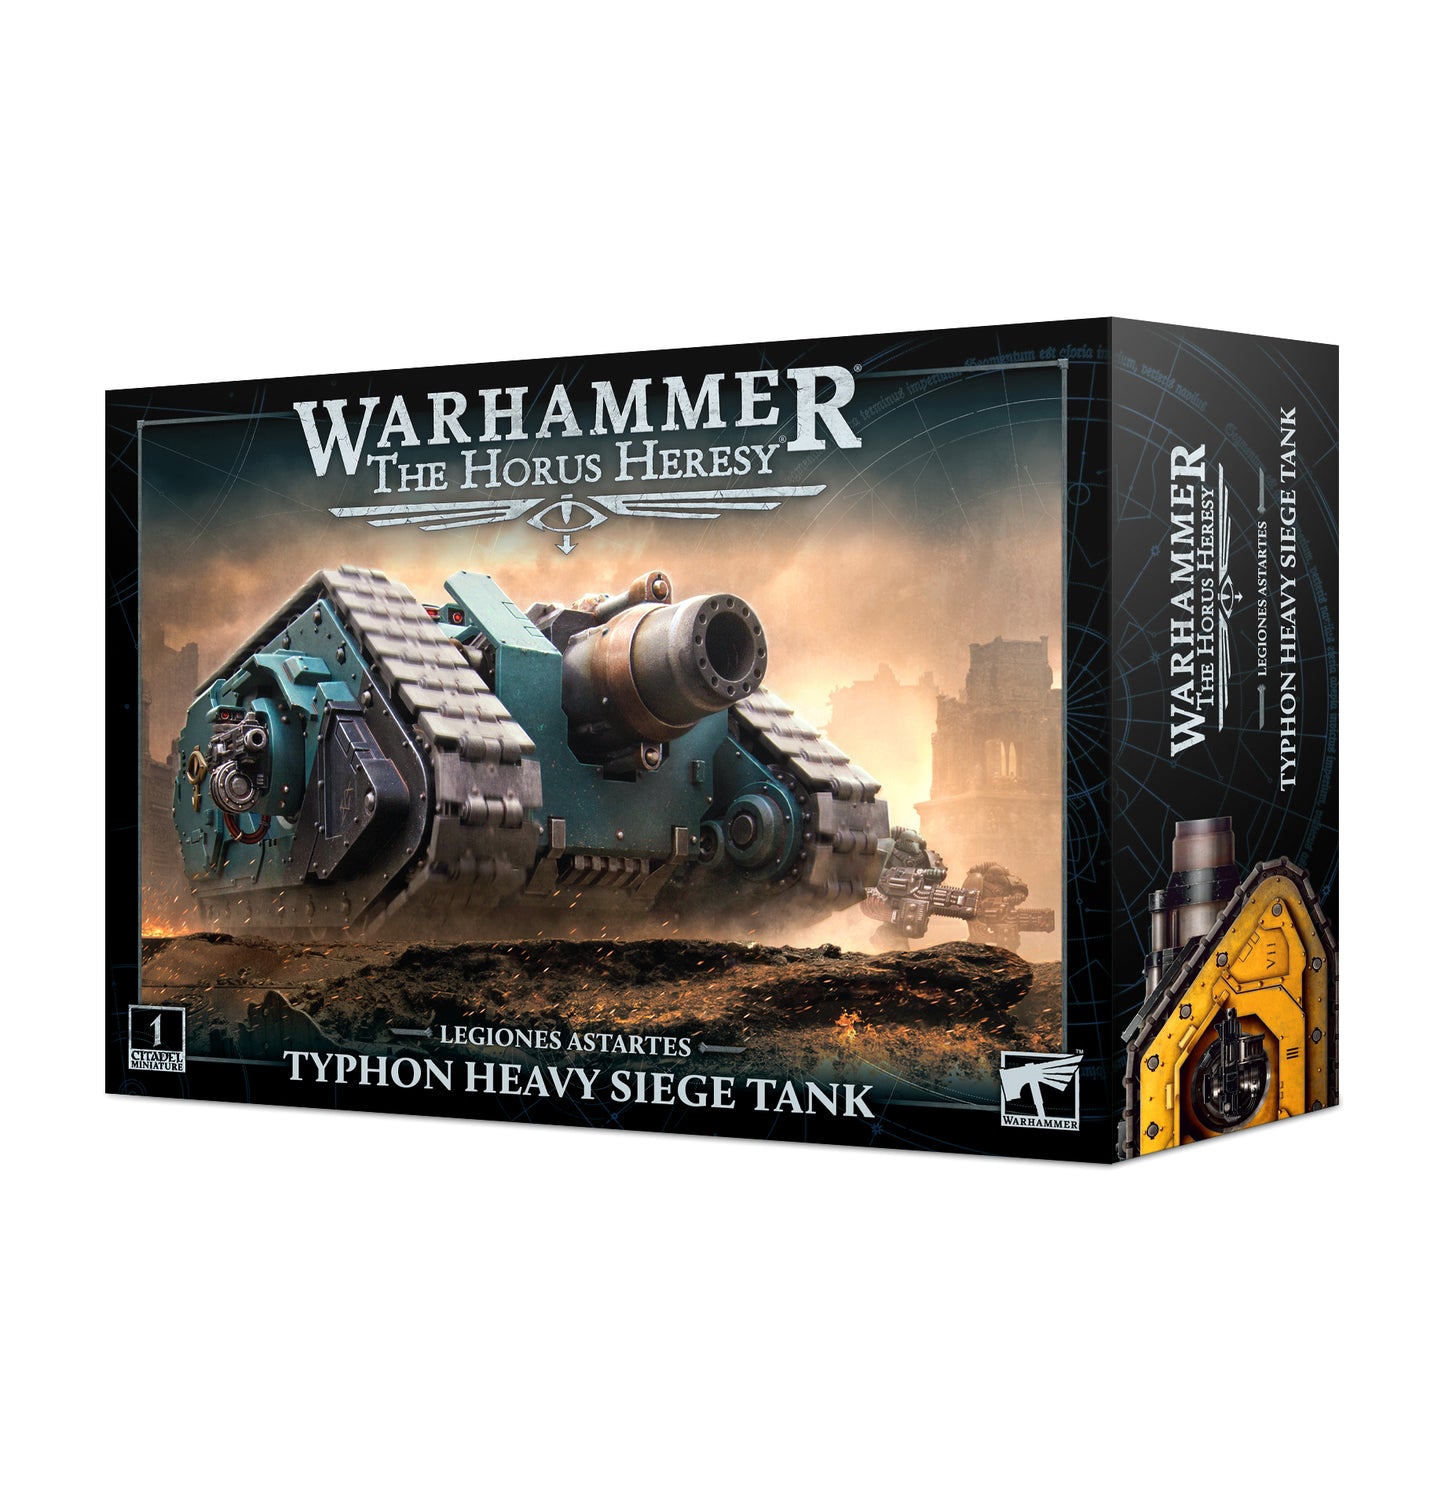 Warhammer: The Horus Heresy - Legiones Astartes - Typhon Heavy Siege Tank